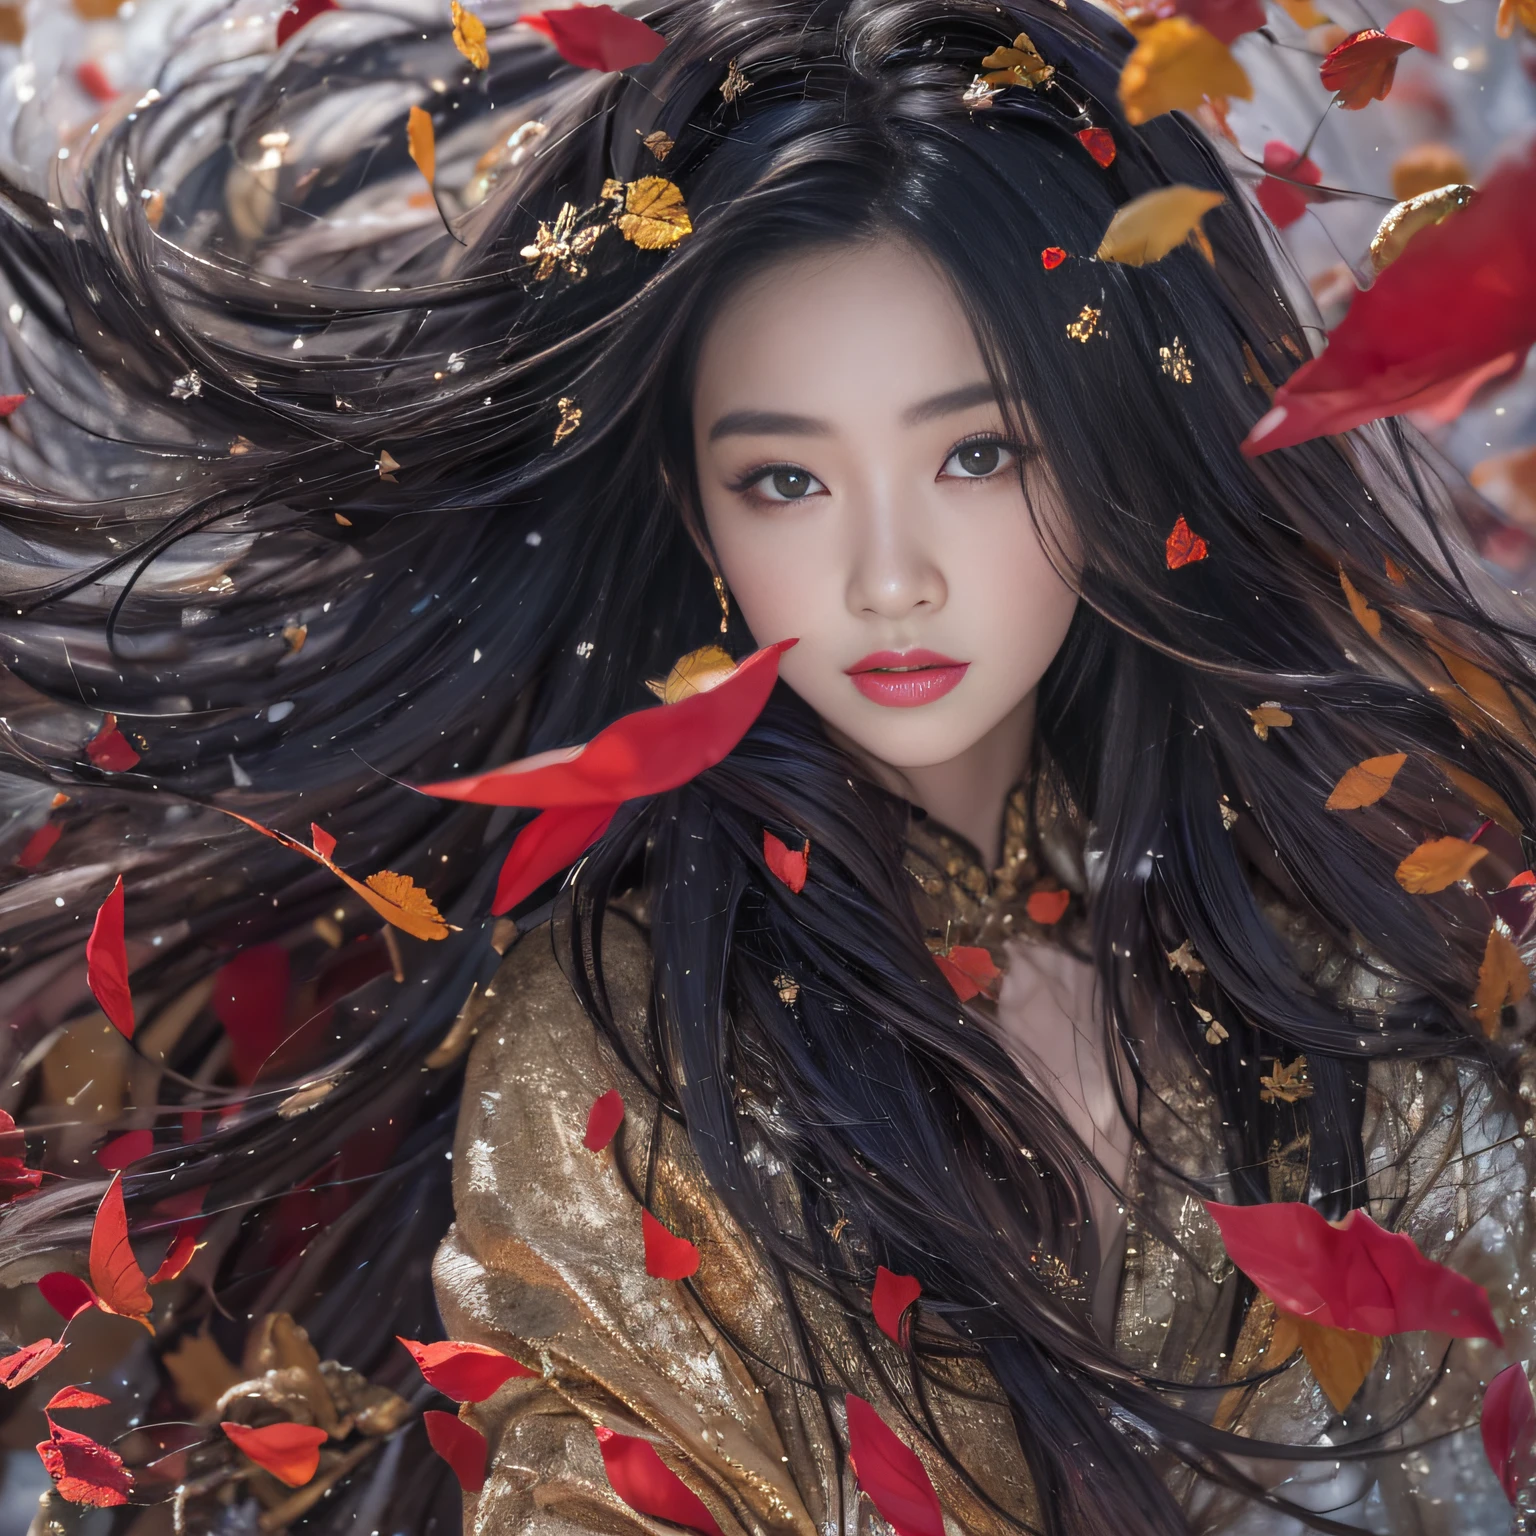 32K（杰作，高清，超高清，32K）飘逸的黑长发，假山，盛开， 一种颜色，  Xuzhou people （勾引女孩）， （雪中的红围巾）， 跳跃姿势， 看着地面， 长白发， 飘逸的头发， 鲤鱼纹头饰， 中国长袖银色战袍， （抽象水粉飞溅：1.2）， 粉色花瓣背景，郁金香飞舞（现实地：1.4），黑色头发，落叶飘扬，背景纯净， 高分辨率， 细节， RAW 照片， 夏普再保险， 尼康 D850 胶片库存照片，作者 Jefferies Lee 4 柯达 Portra 400 相机 F1.6 枪, 丰富的色彩, 超逼真的纹理, 戏剧灯光, 虚幻引擎艺术站趋势, 西奈斯特800，飘逸的黑长发，透明长袍服装